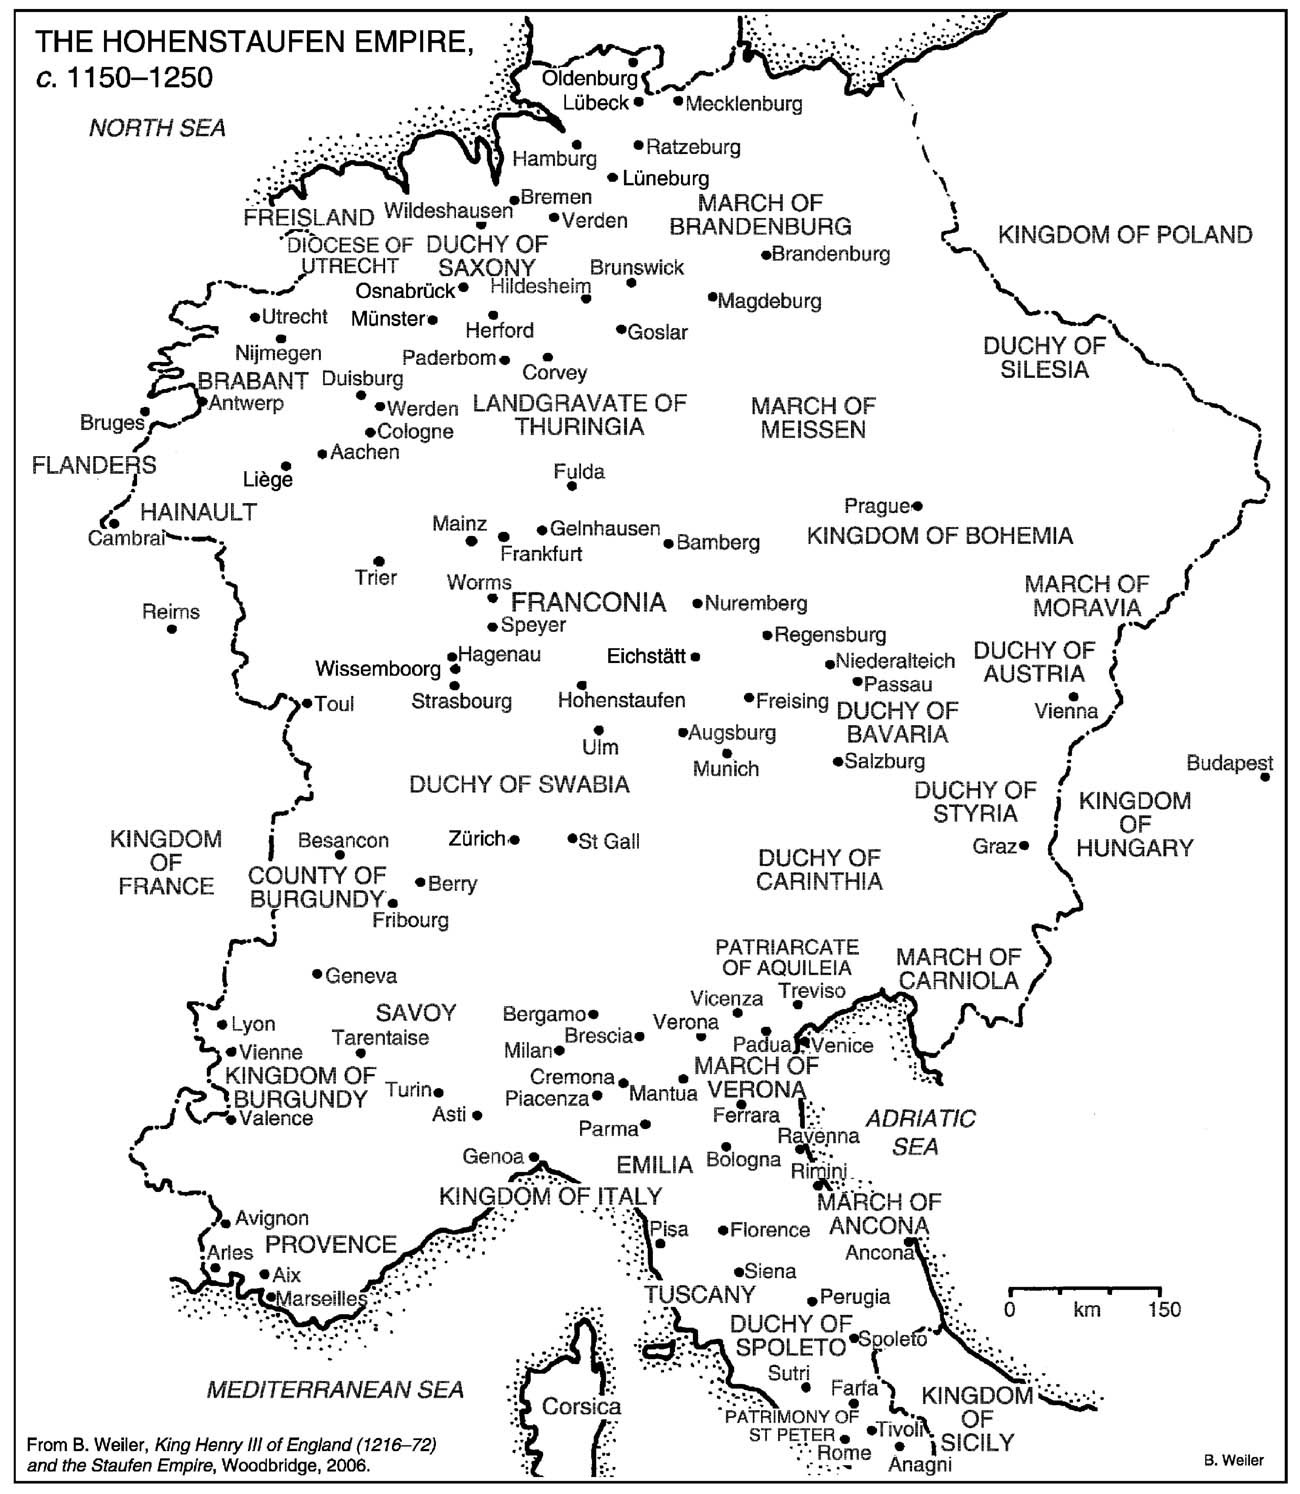 13. The Hohenstaufen Empire, c.1150–1250